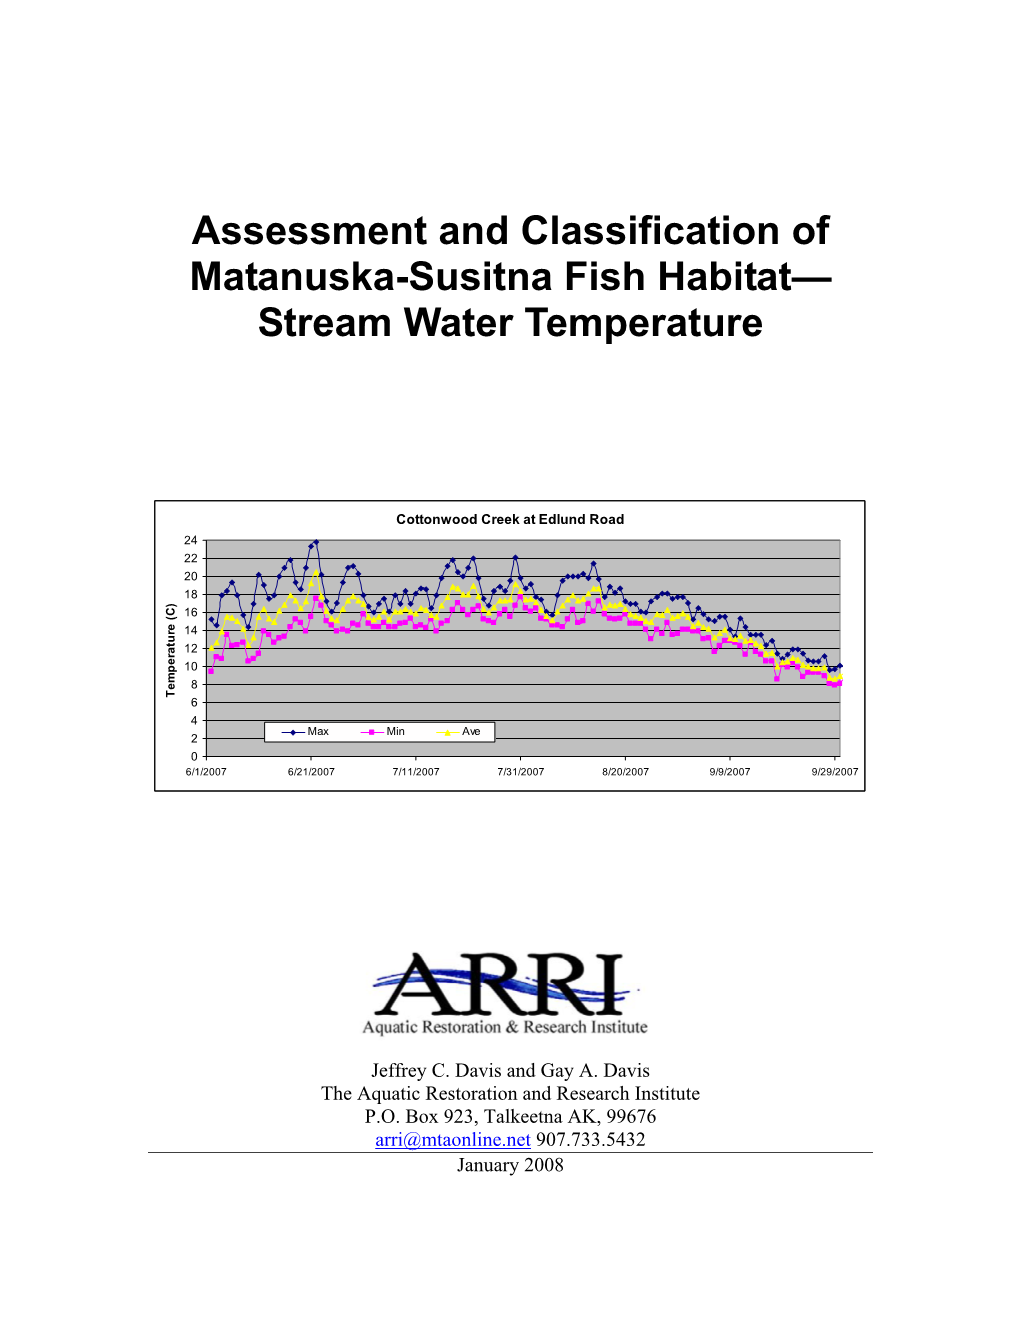 Assessment and Classification of Matanuska-Susitna Fish Habitat— Stream Water Temperature